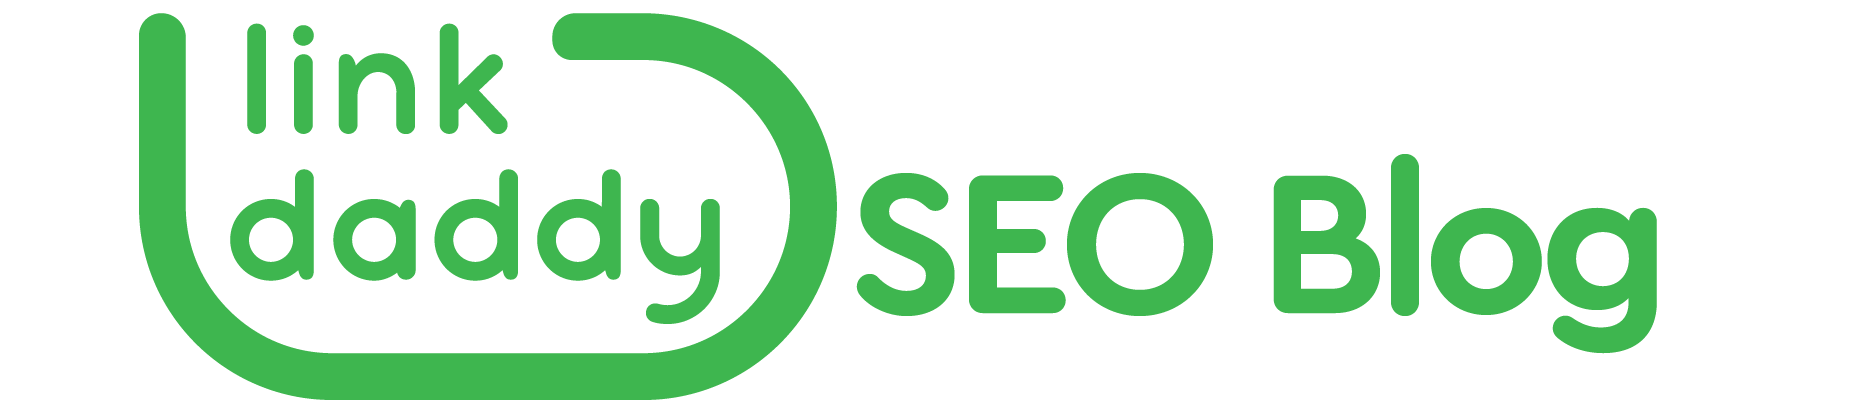 https://storage.googleapis.com/cloudsites/seo-services/867921d9n/img/cropped-linkdaddy-seoblog-logo.png